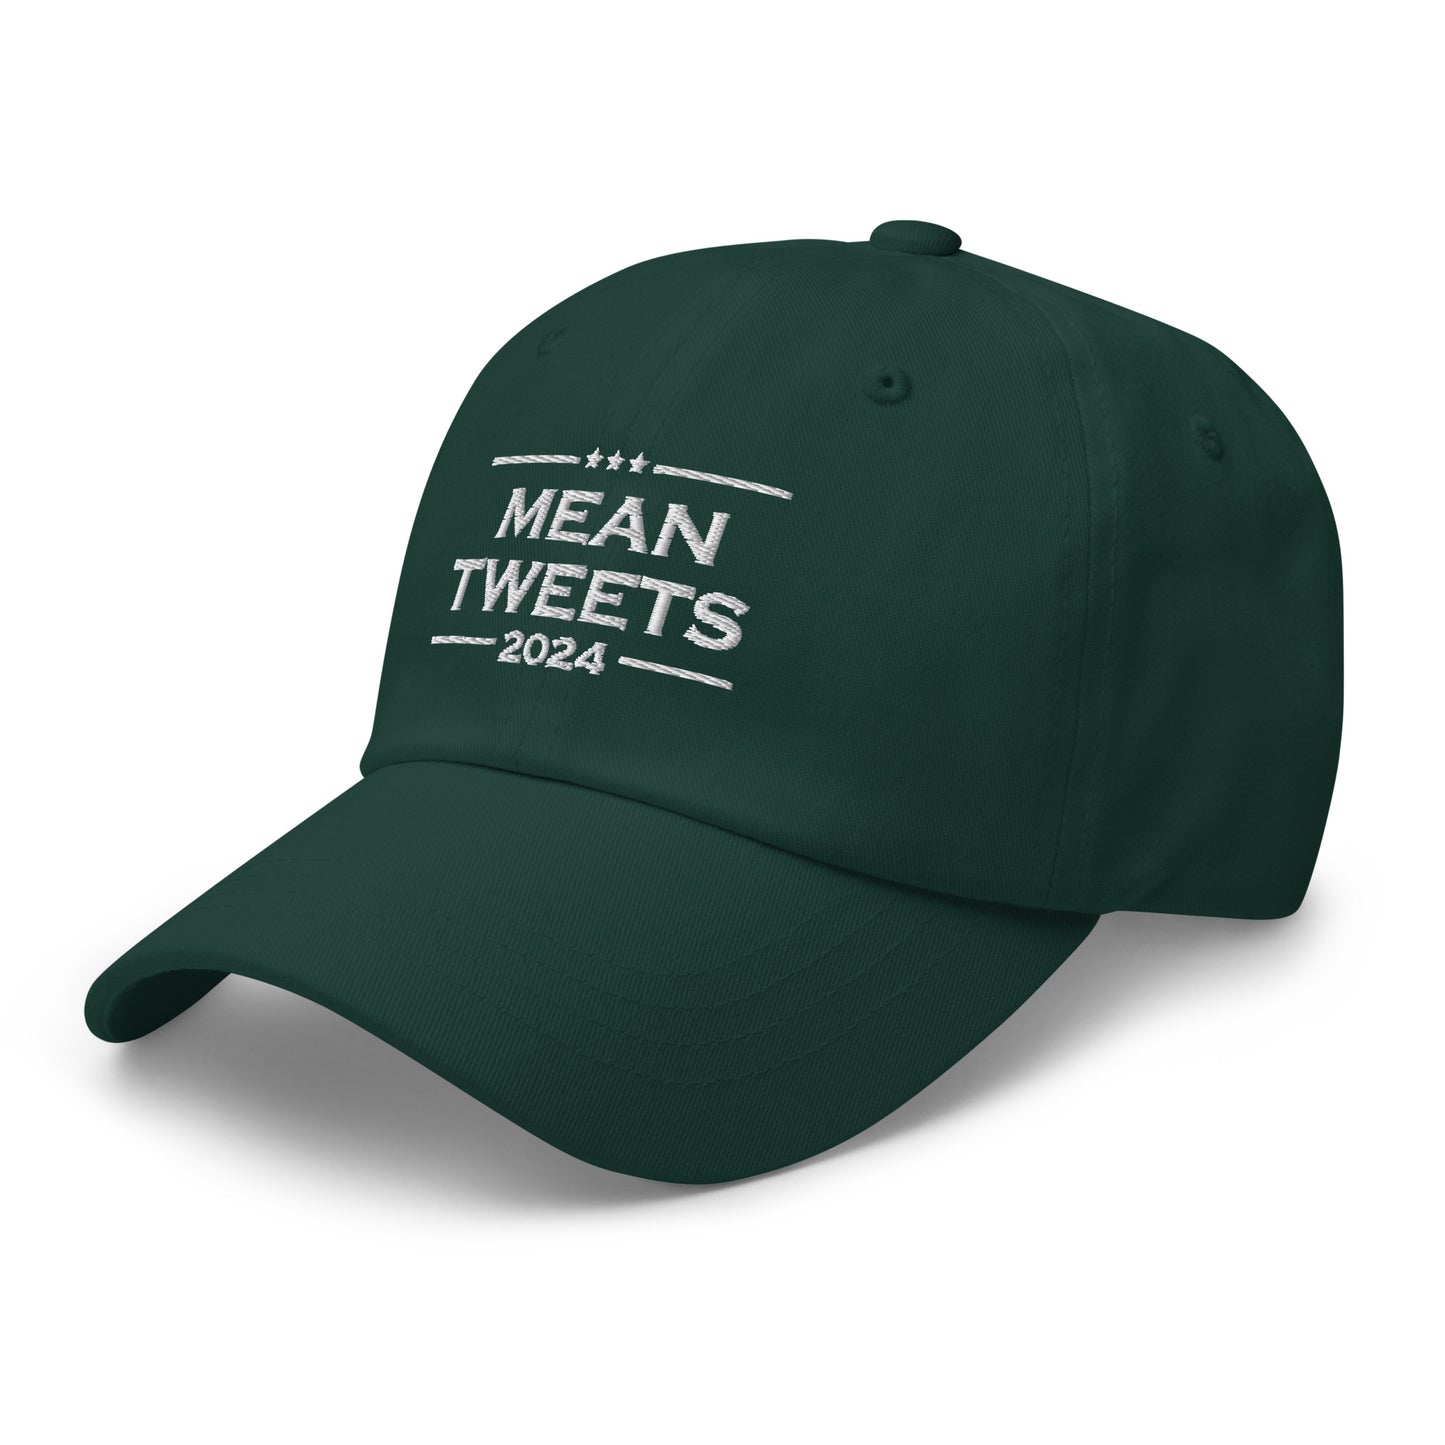 Mean Tweets 2024 hat